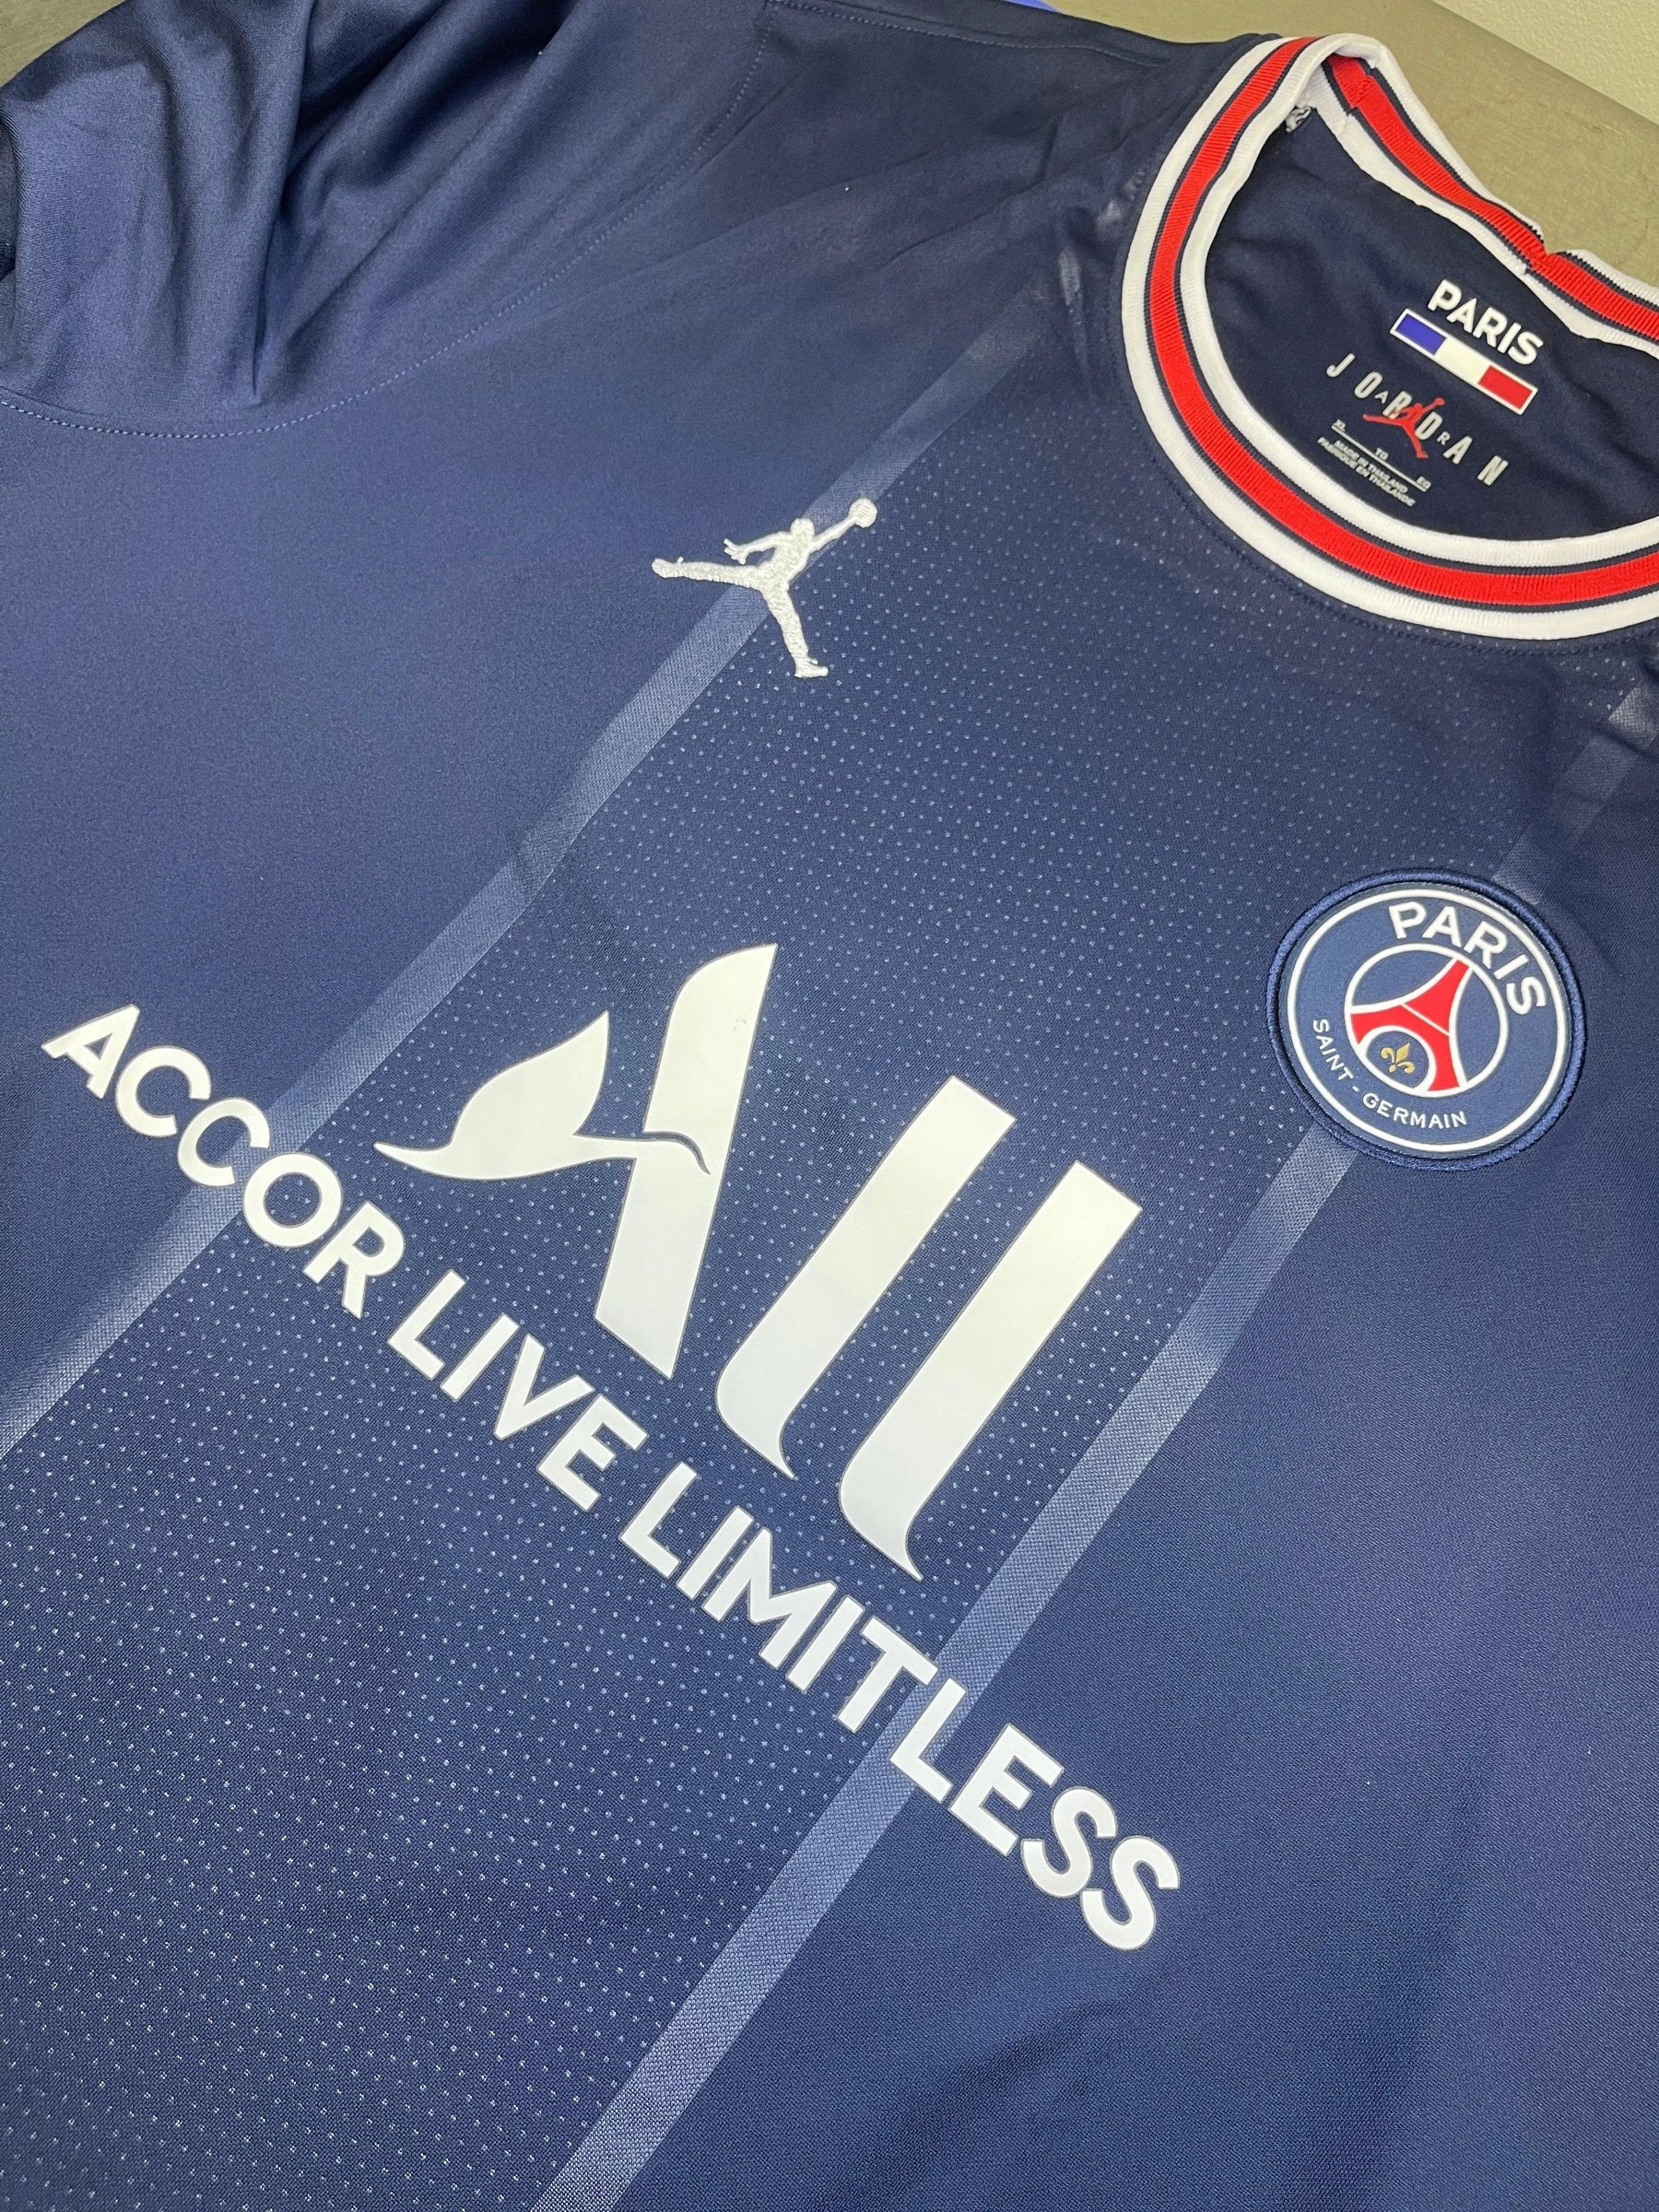 Paris Saint-Germain Verratti Stadium Shirt 2021-22 Men's X-Large NWT